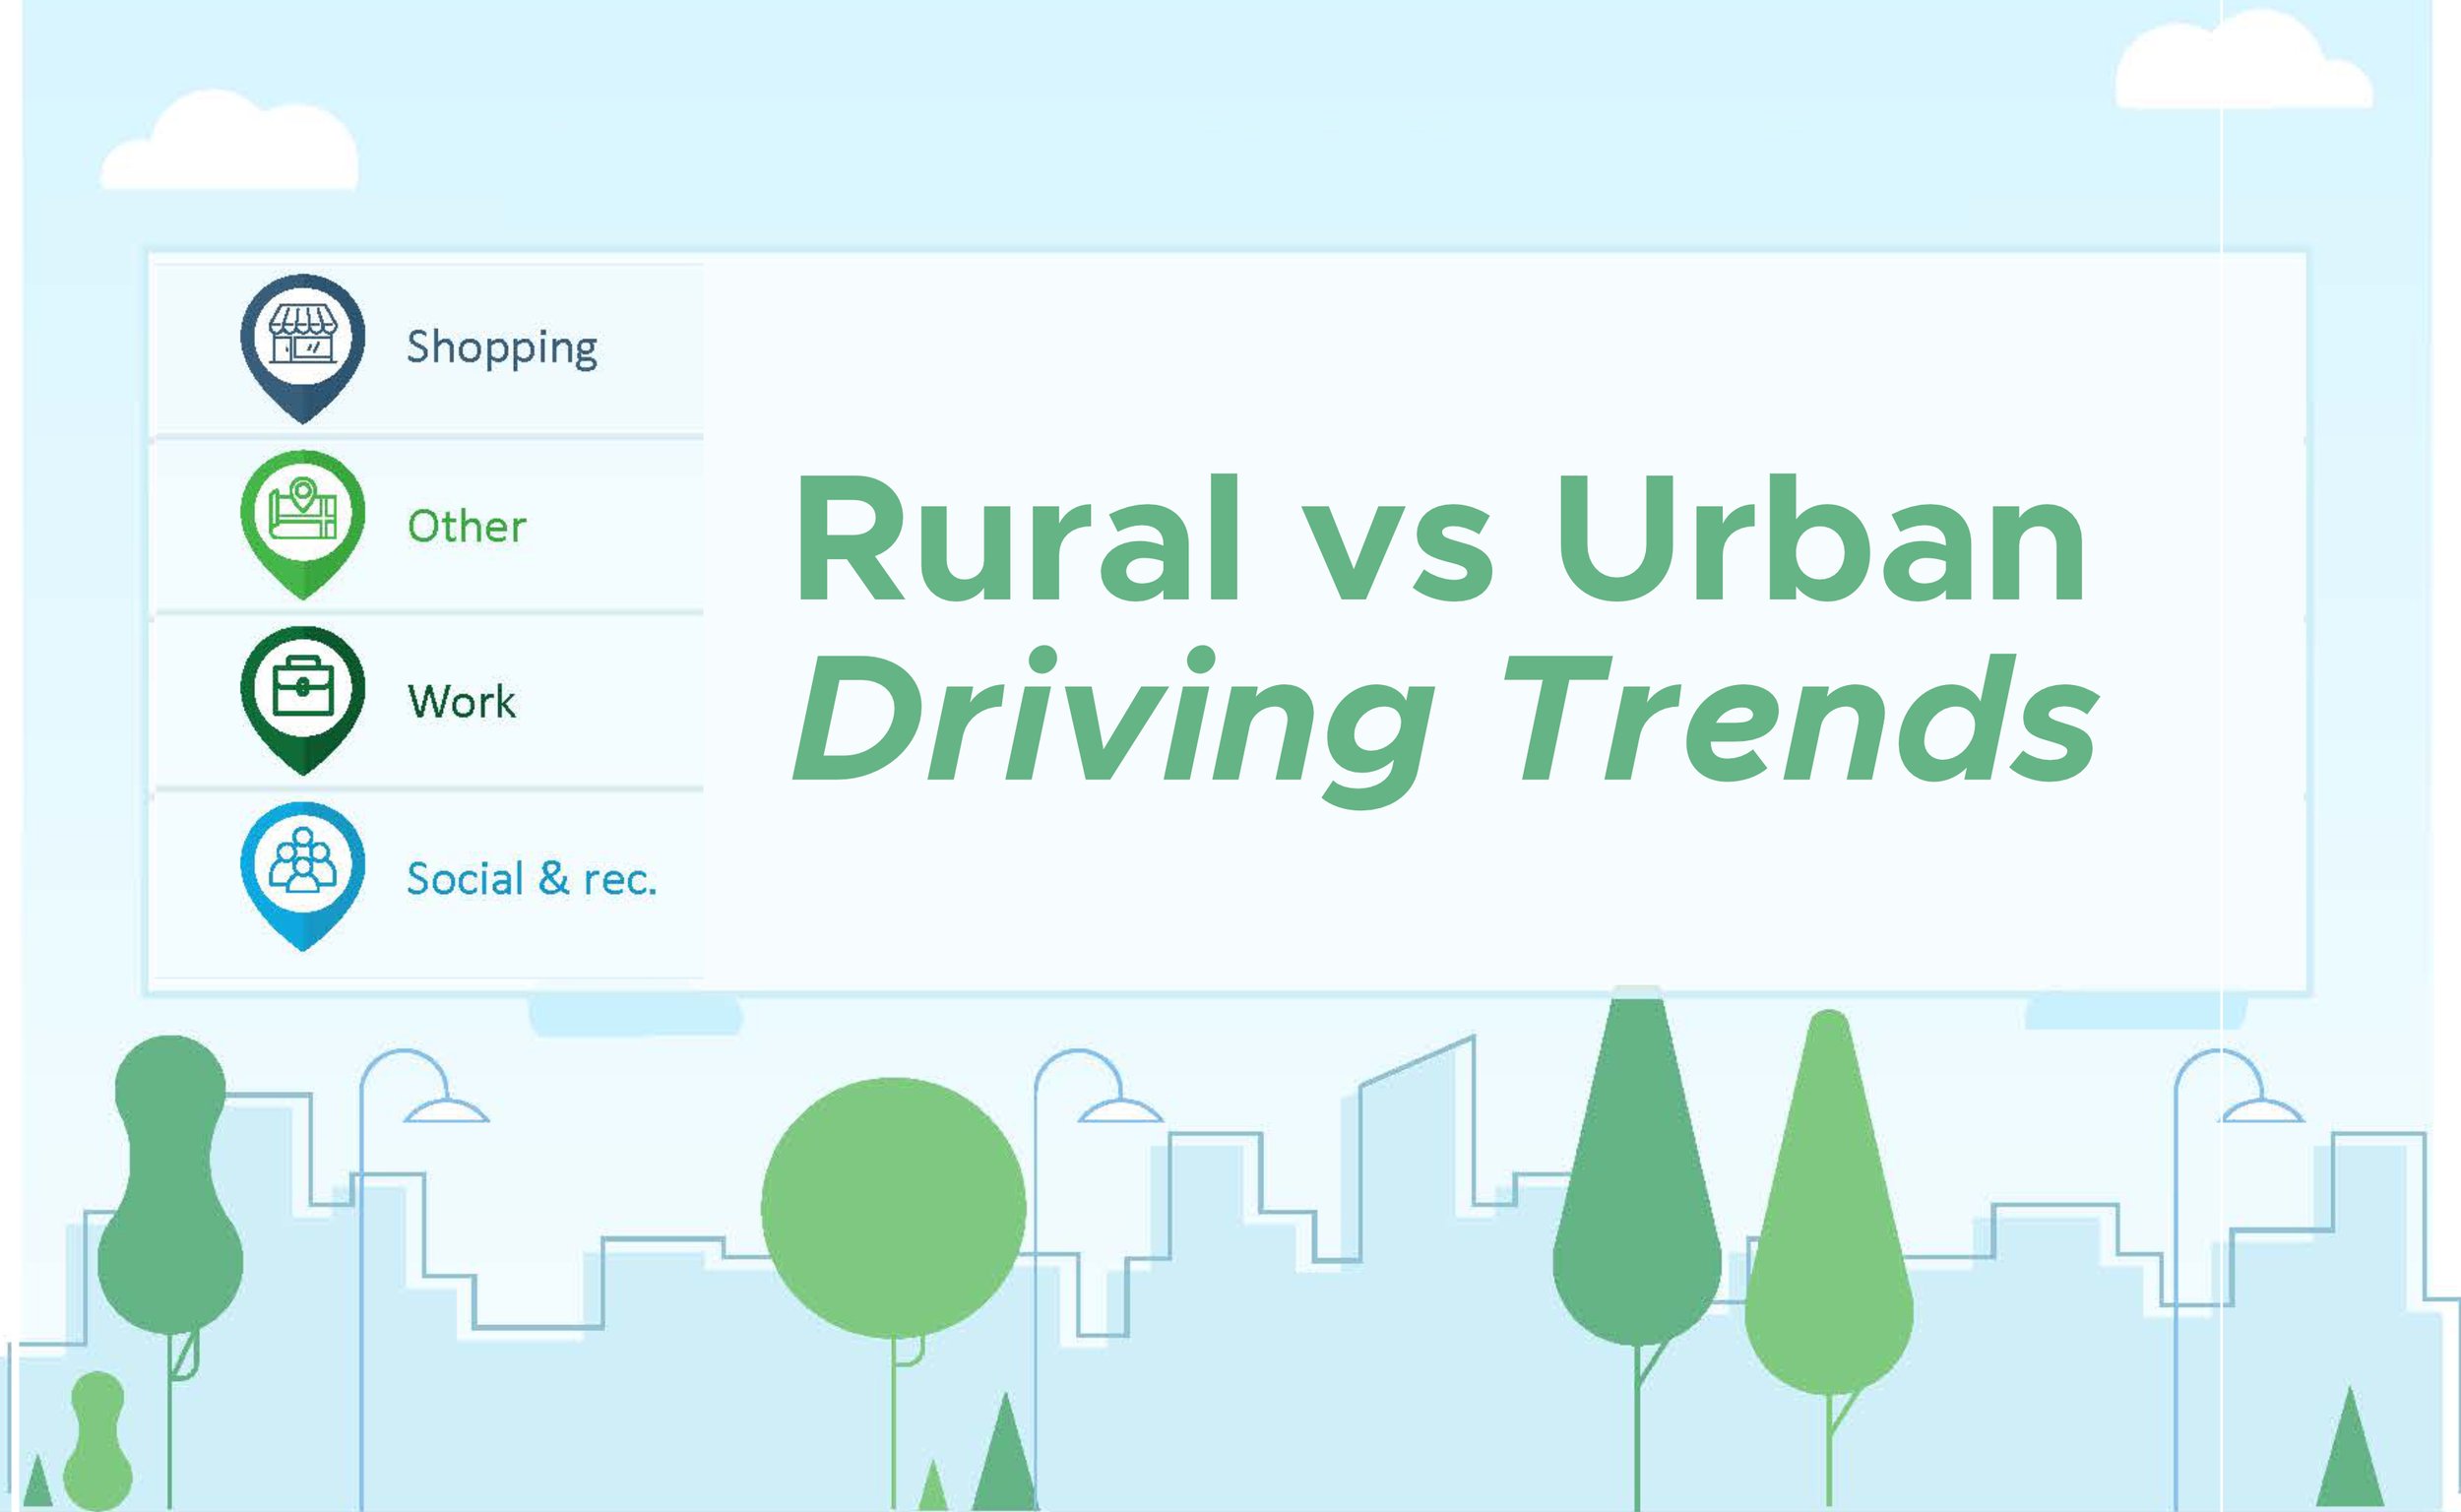 Urban vs rural driving trends thumb.jpg